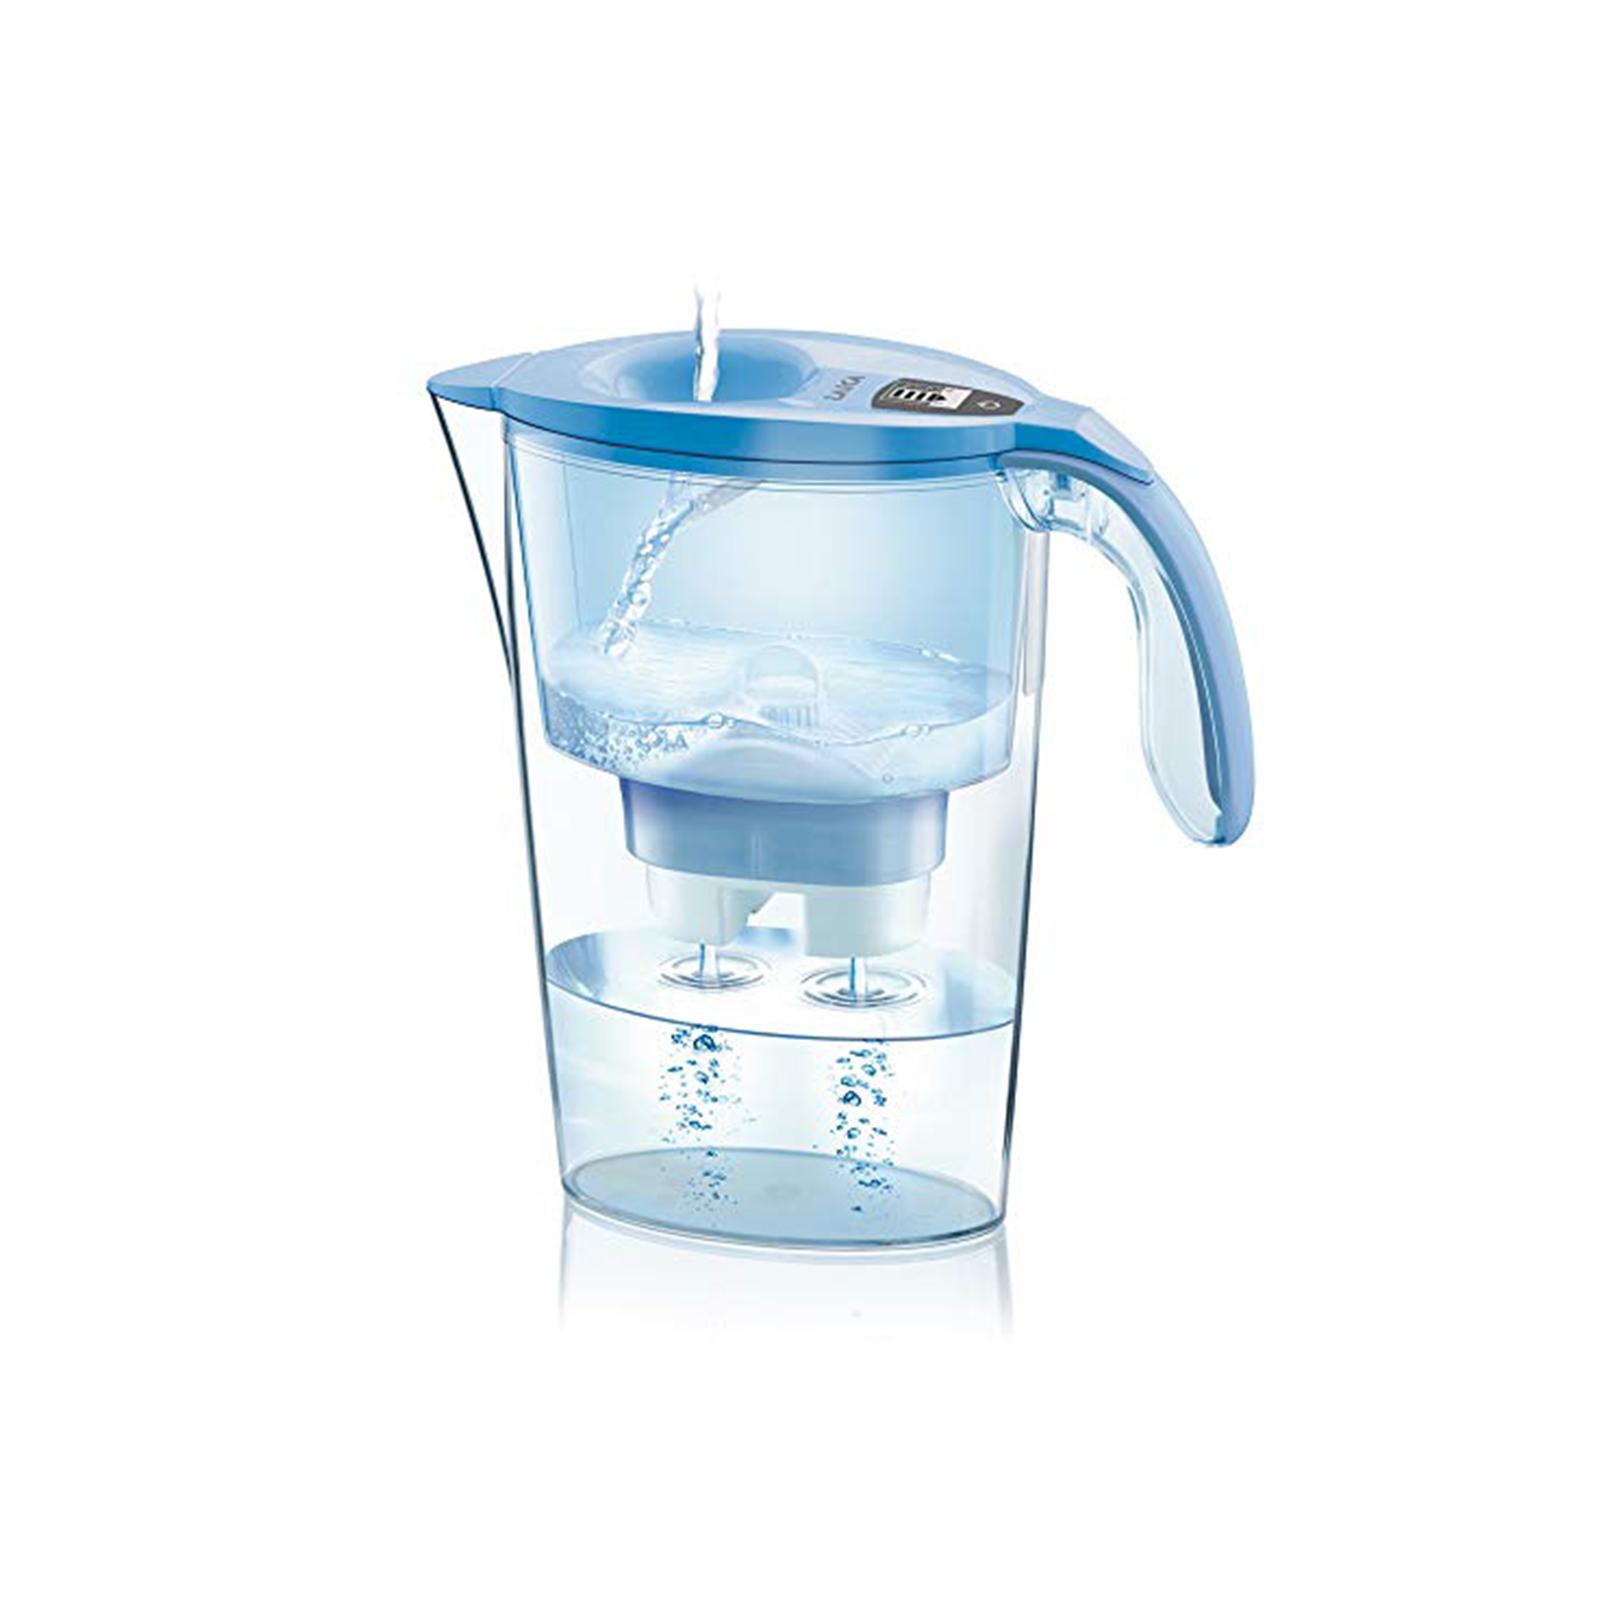 Water filter, LA186 Azul LAICA